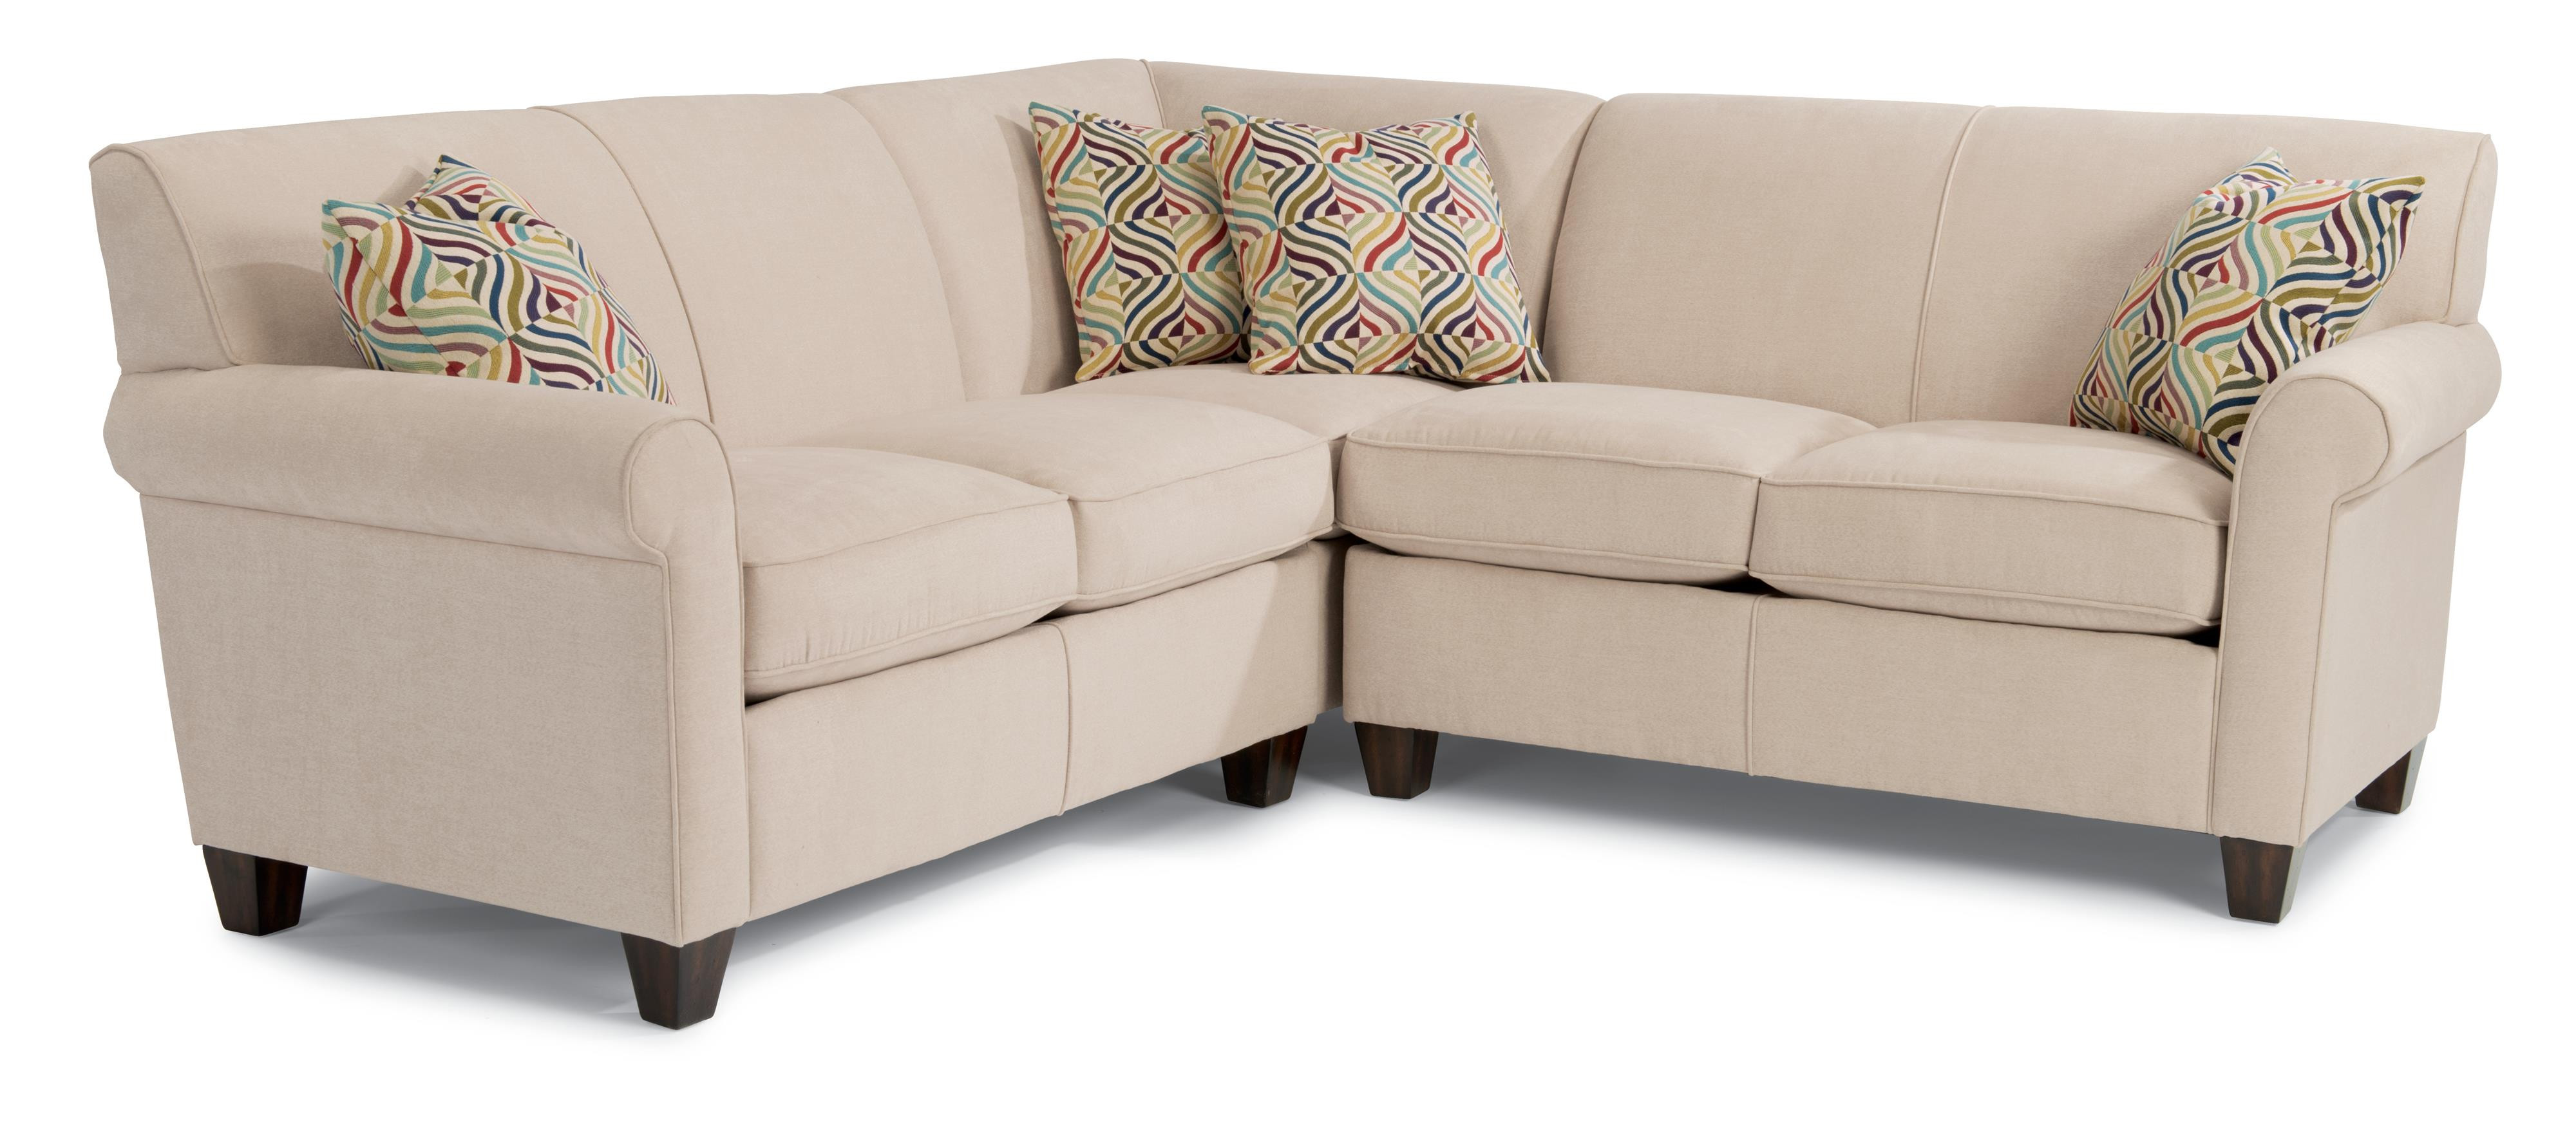 Best ideas about Flex Steel Sectional Sofa
. Save or Pin Flexsteel Dana Three Piece Corner Sectional Sofa Now.